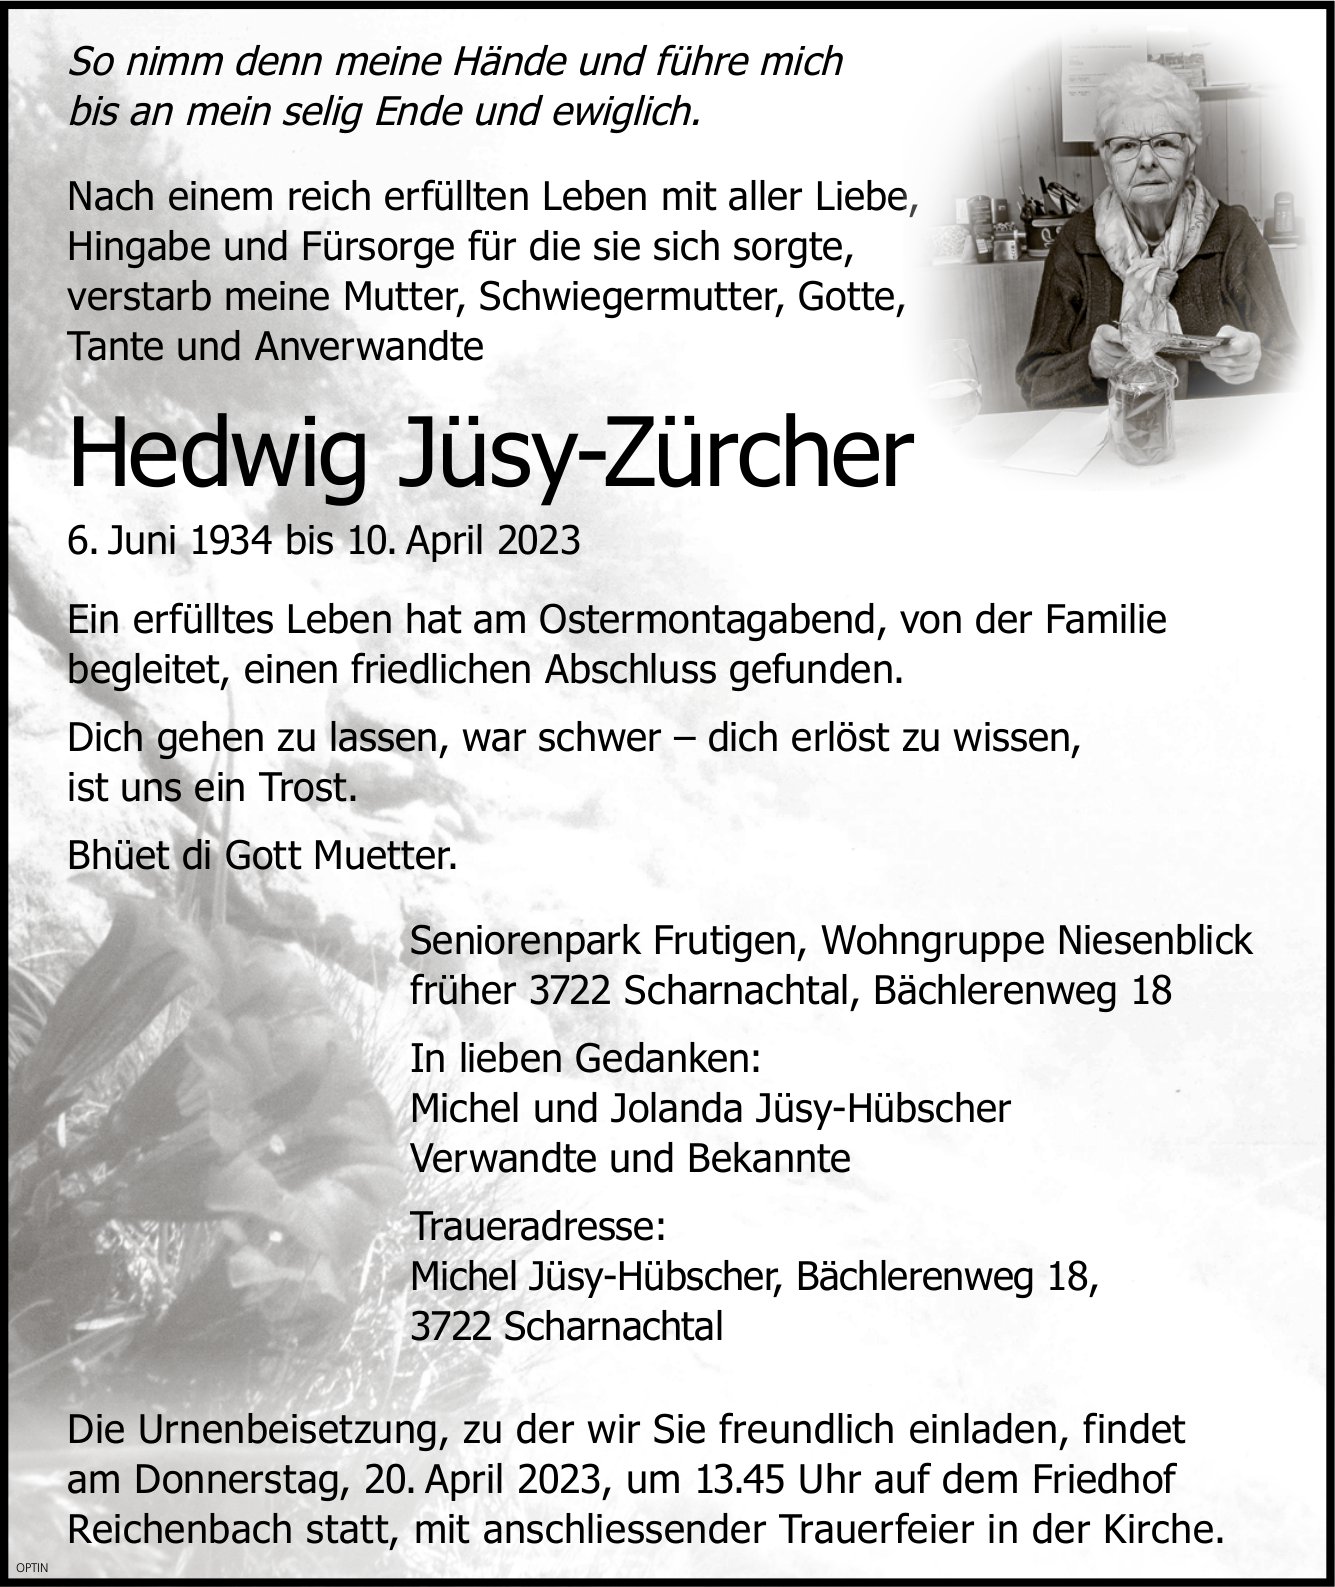 Hedwig Jüsy-Zürcher, April 2023 / TA